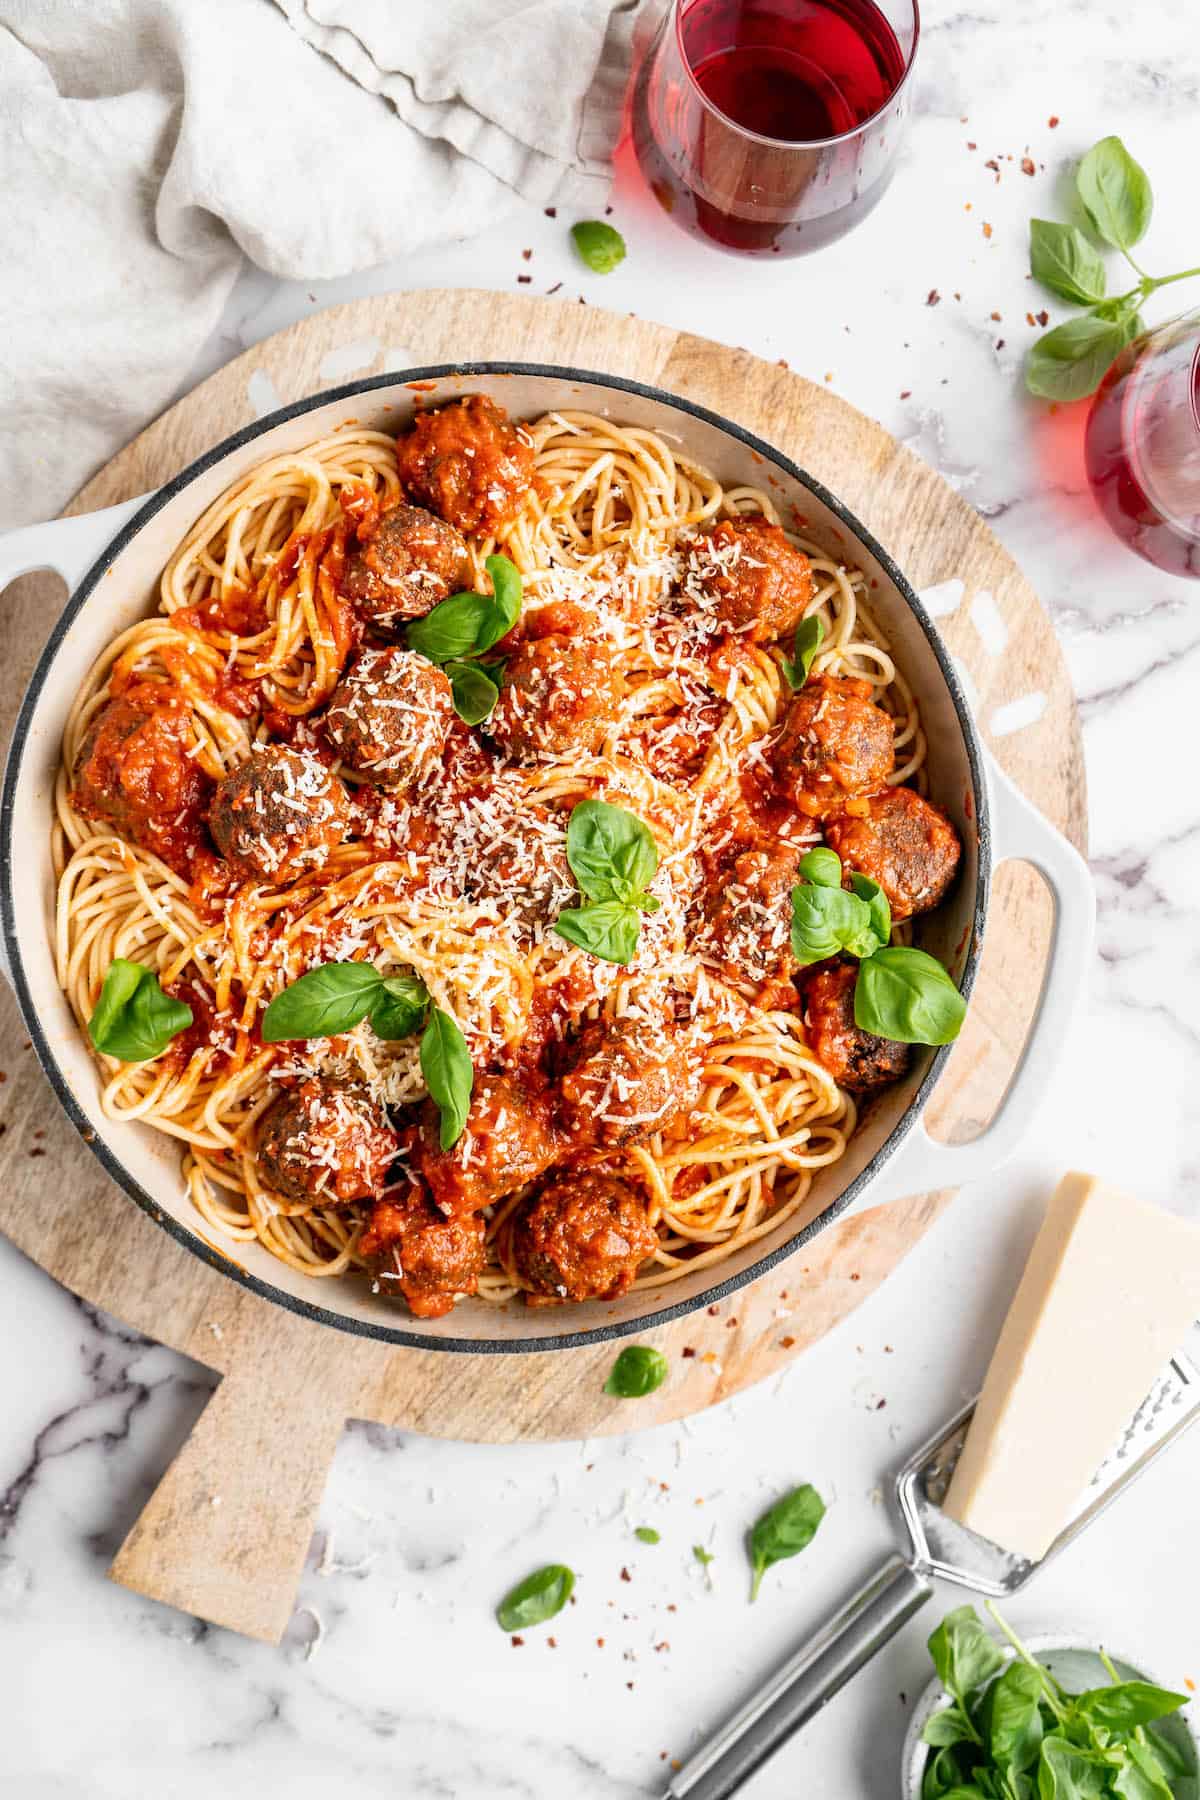 Pan of vegan spaghetti and meatballs set on wood board